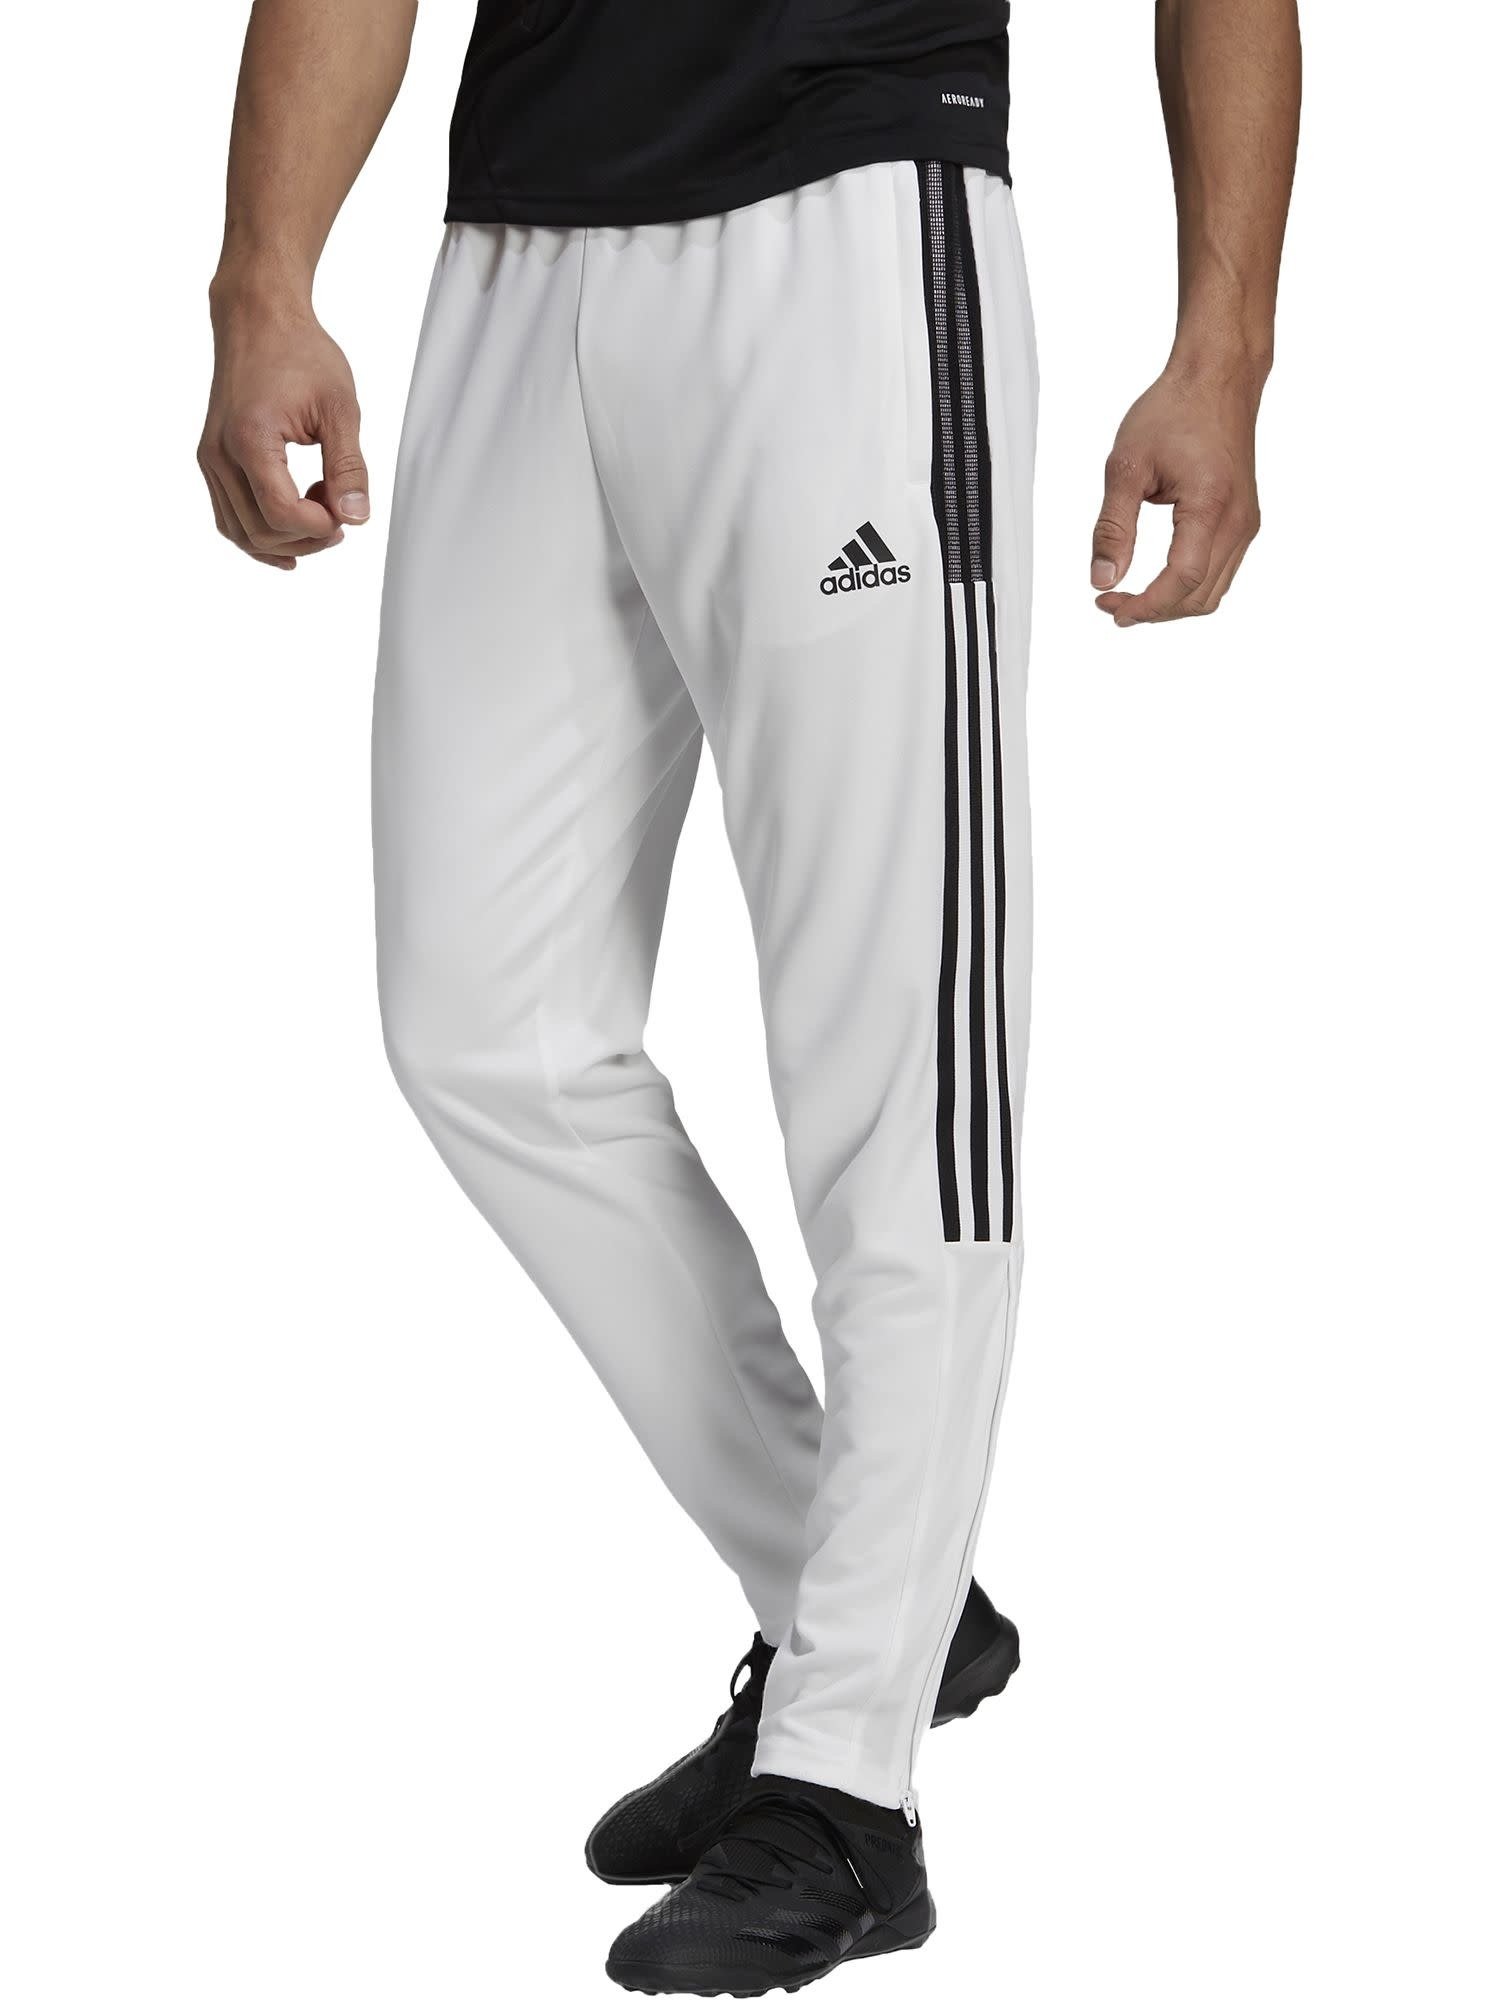 Adidas Tiro 23 Pro Pants Black Men's Soccer Adidas US, 47% OFF